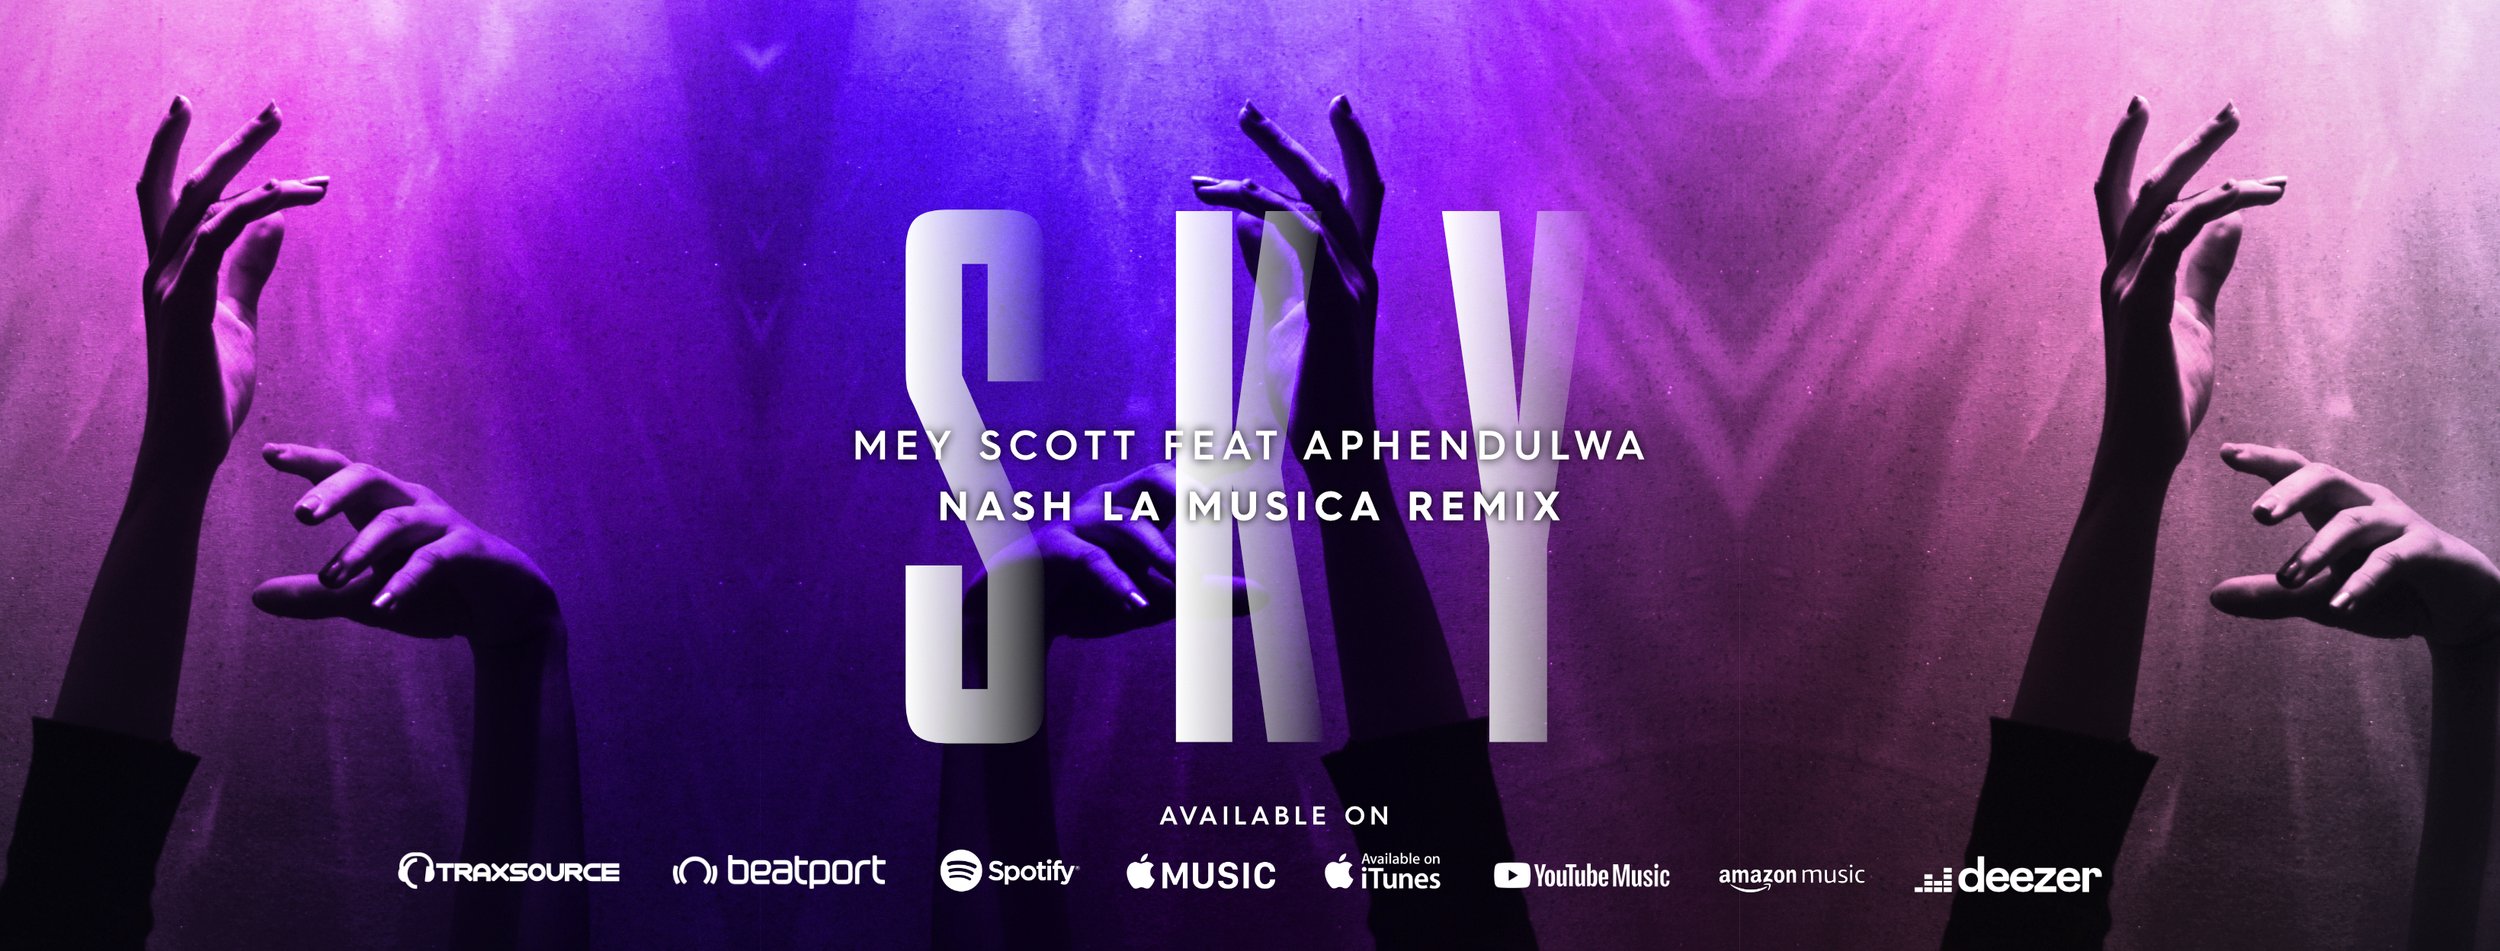 Mey Scott ft. Aphendulwa - Sky (Nash La Musica Remix) - Cover Photo Out Now (2).jpg